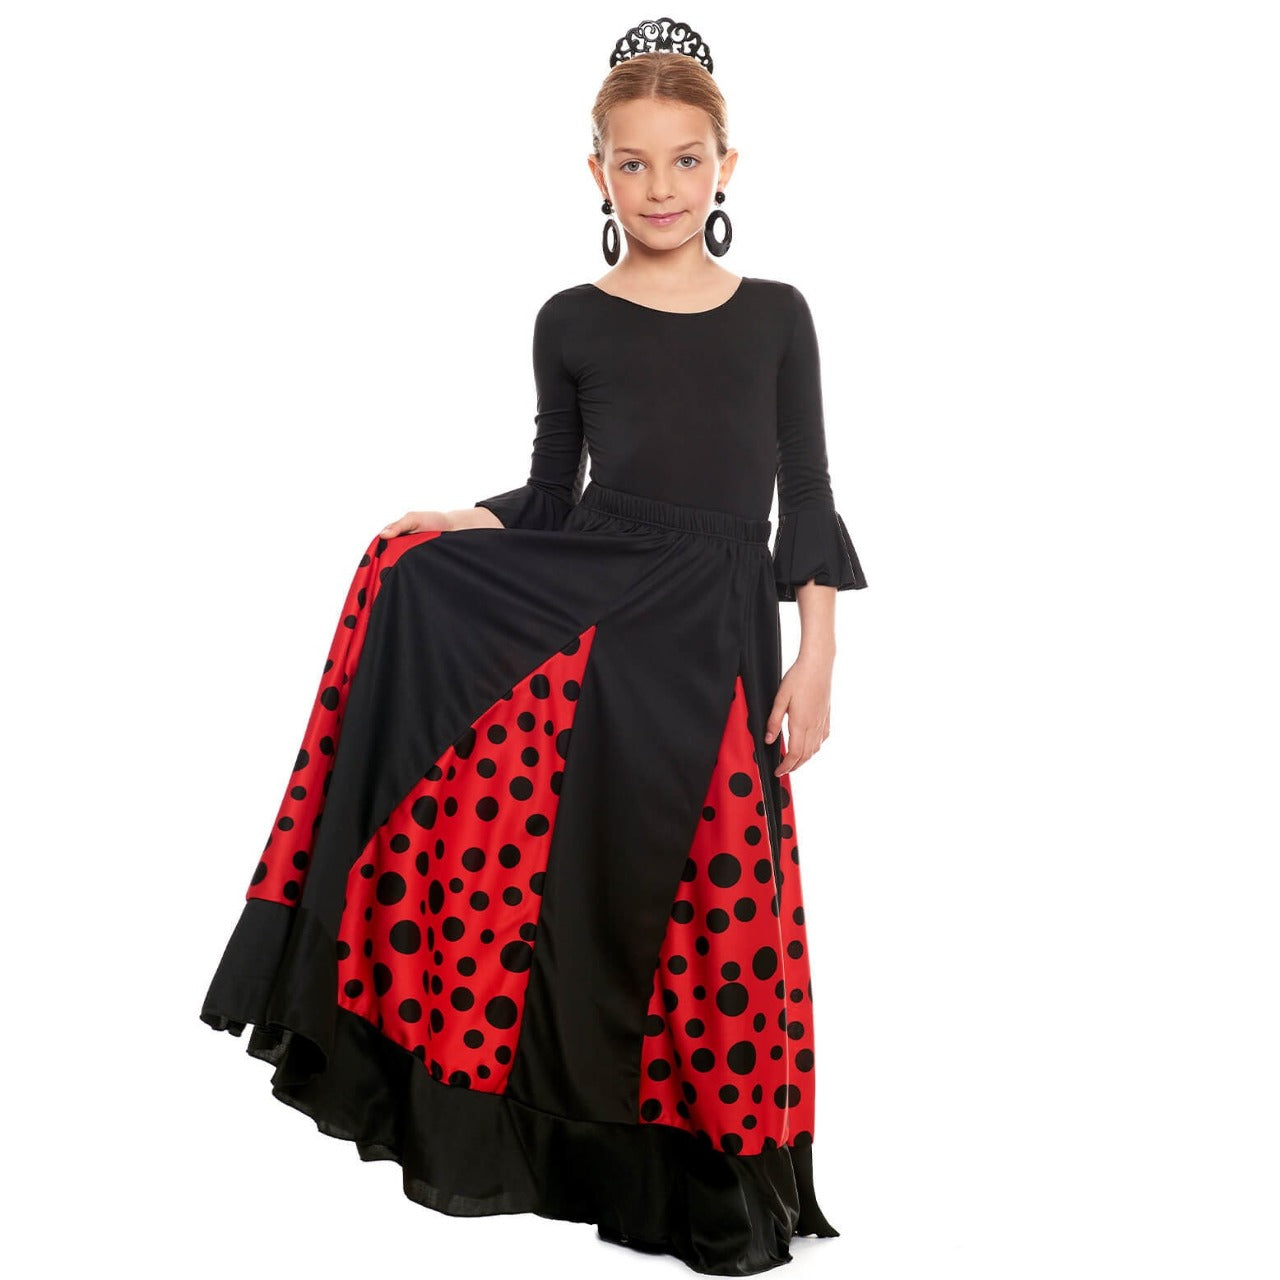 Comprar online Falda de Flamenca con Quillas Negra infantil